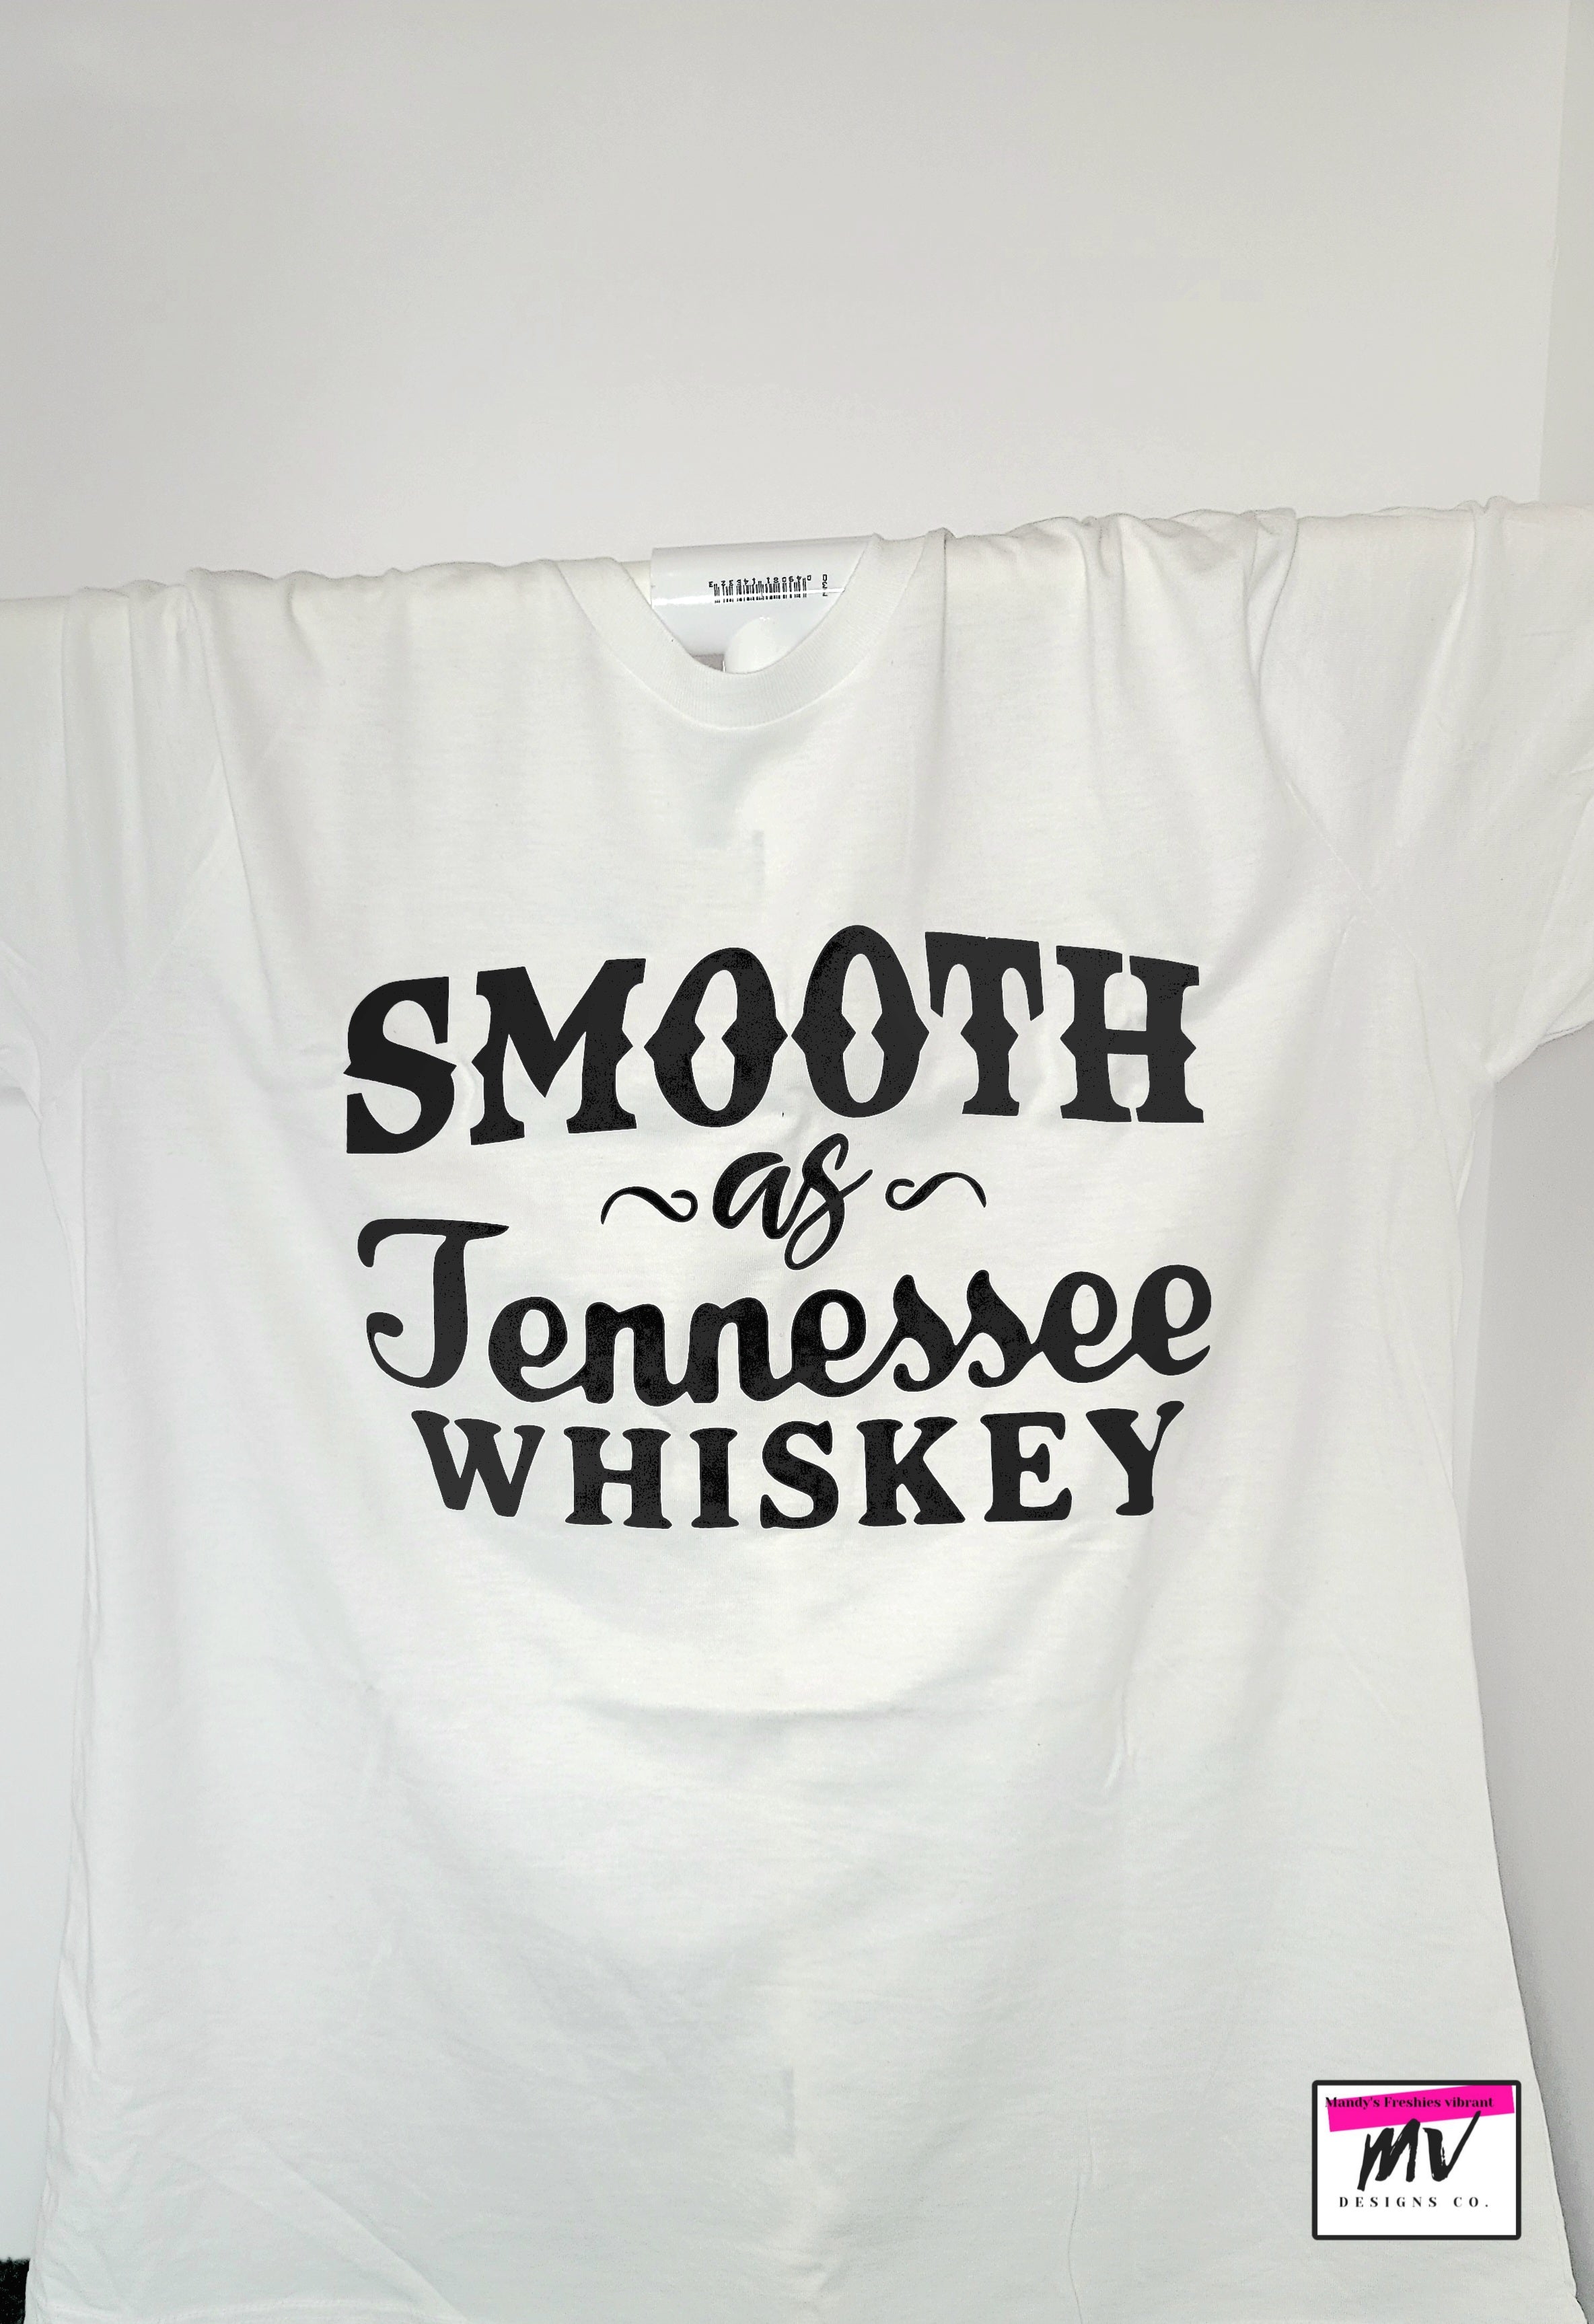 Tennessee Whiskey Freshie